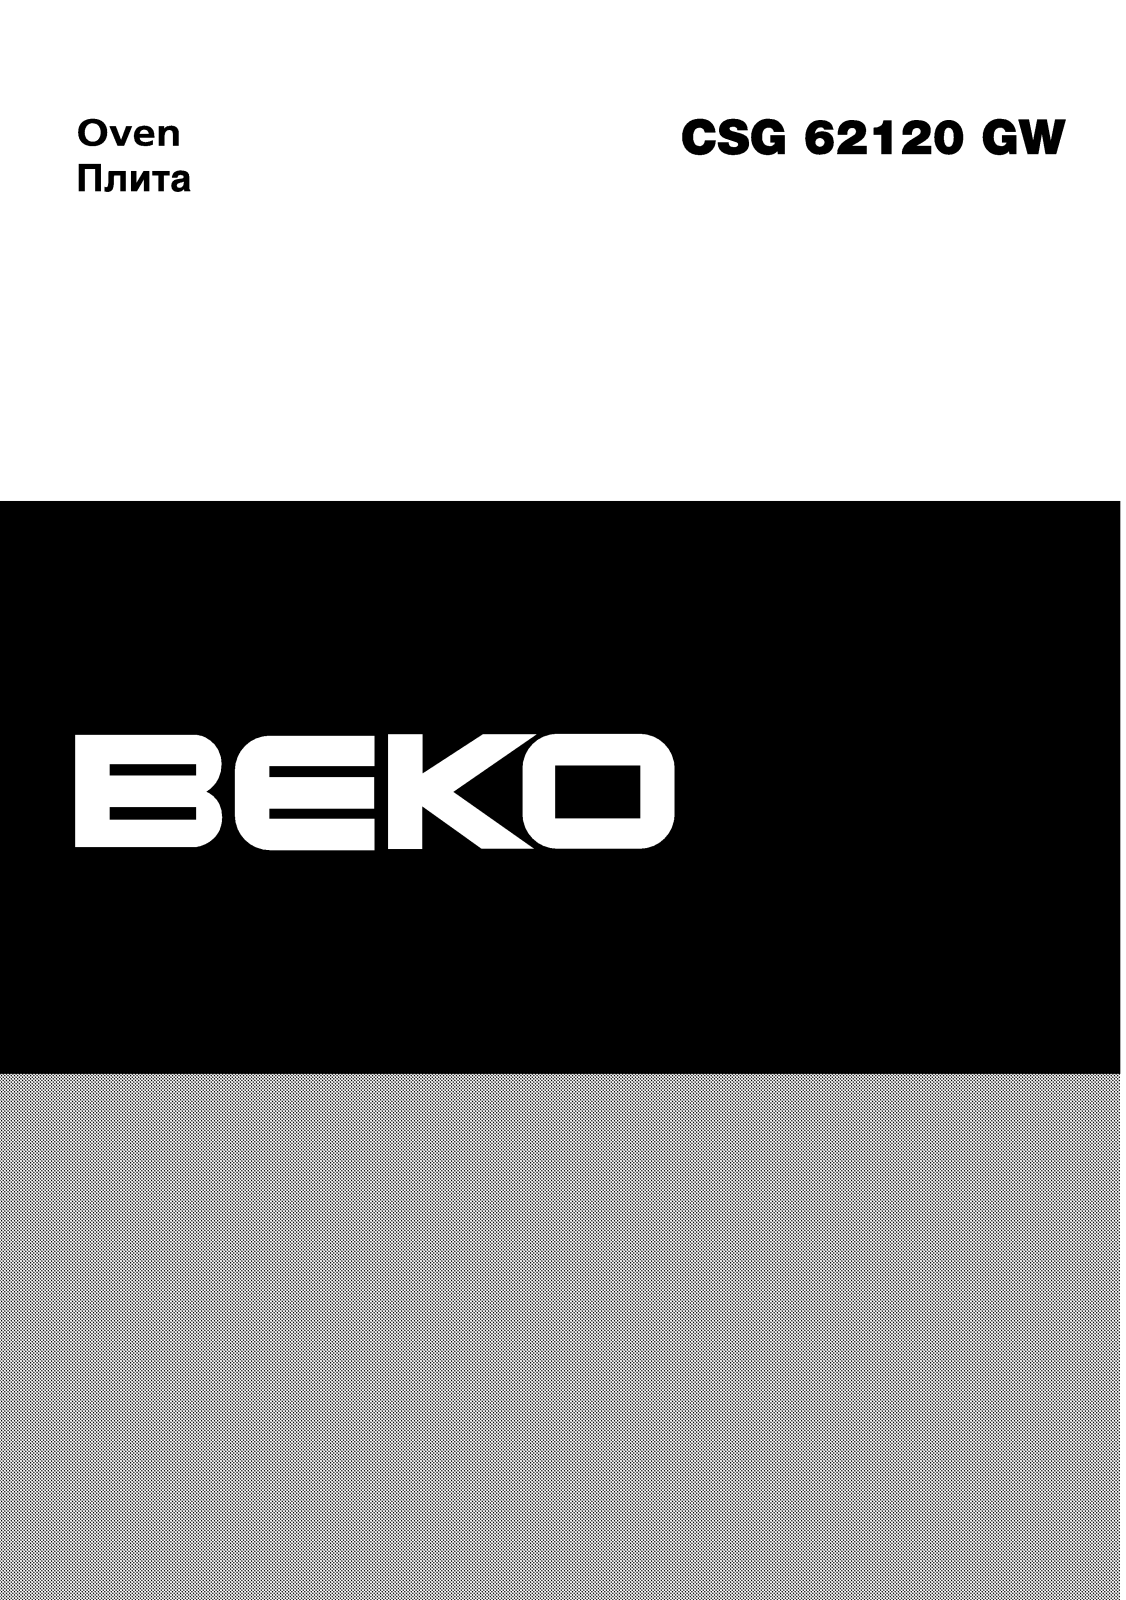 Beko CSG 62120 GW User Manual